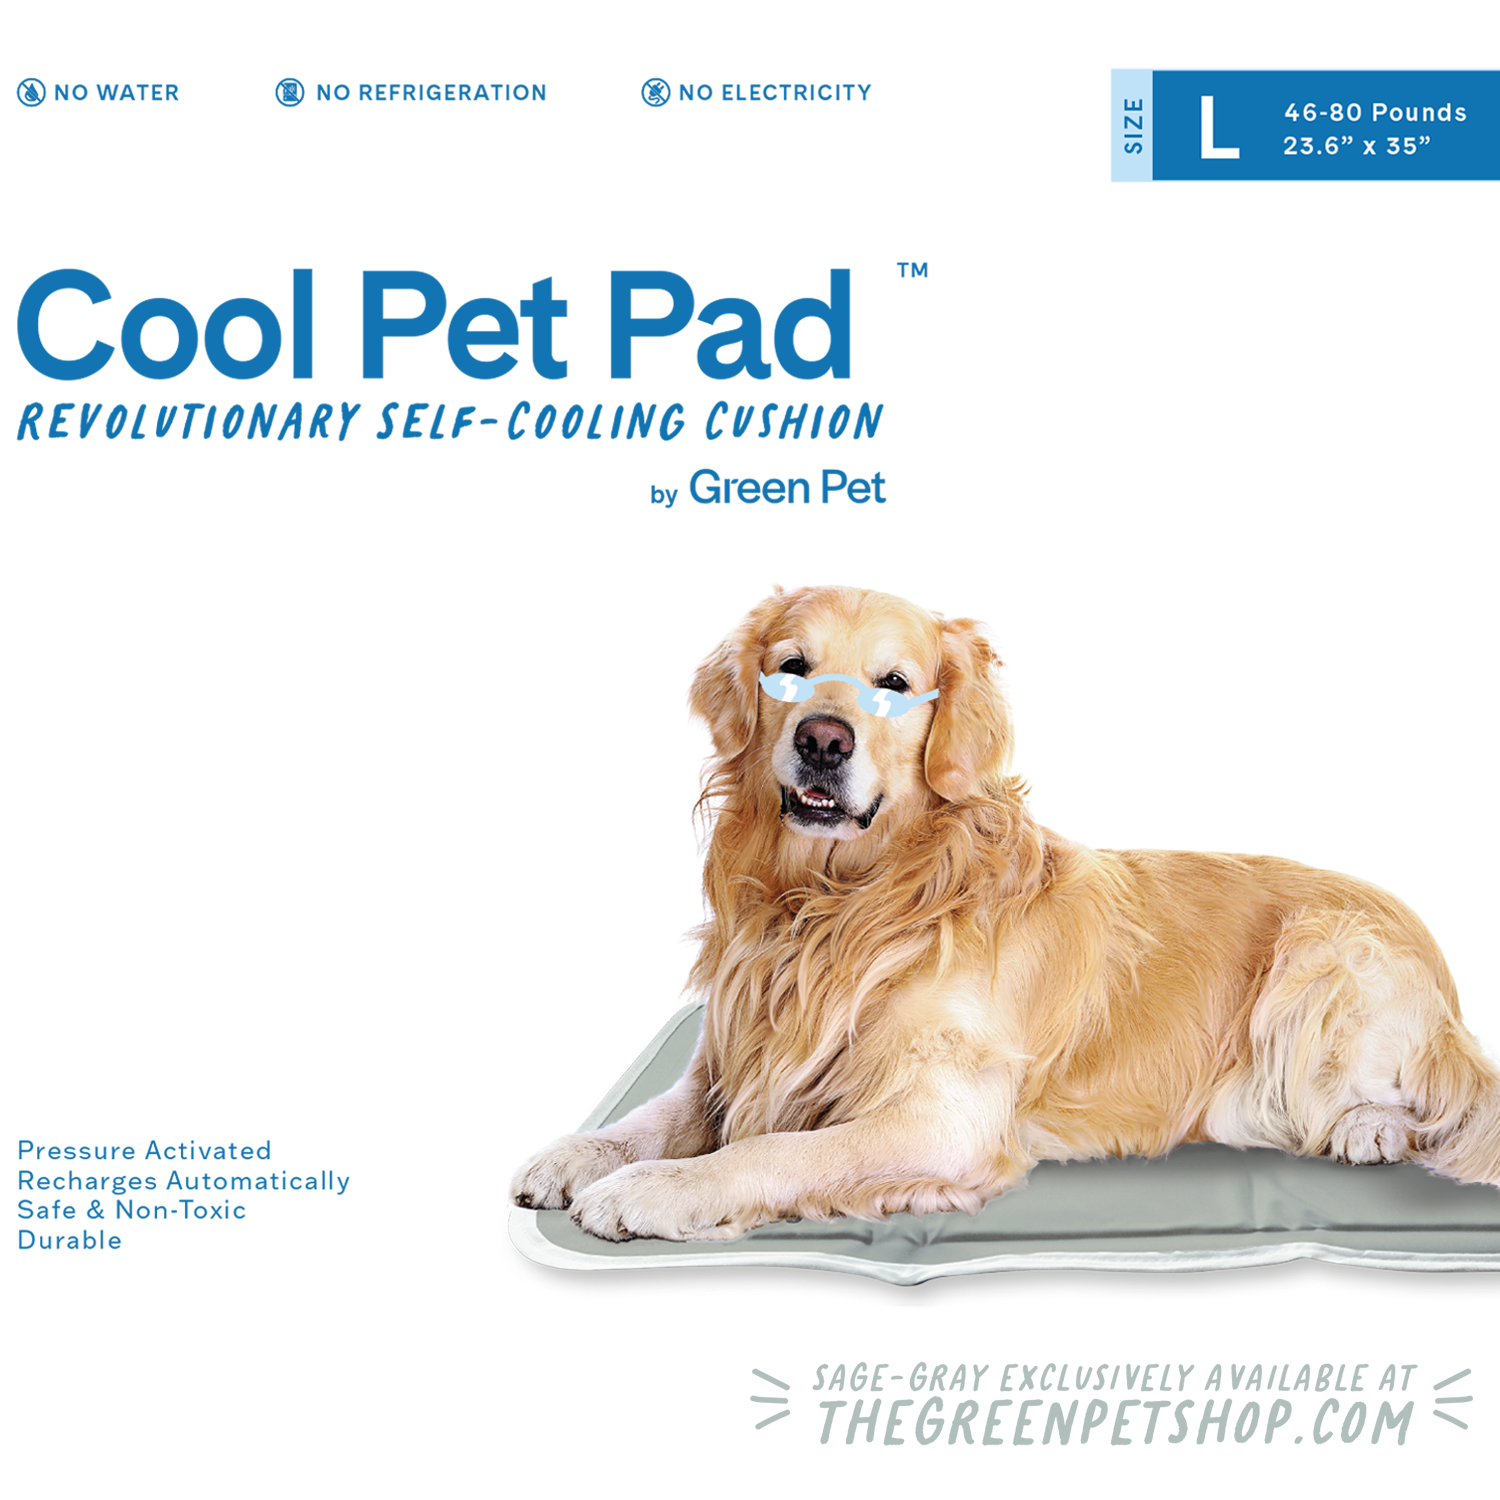 Pet Cooling Mat - The self-cooling mat for pets at Hobbyklok